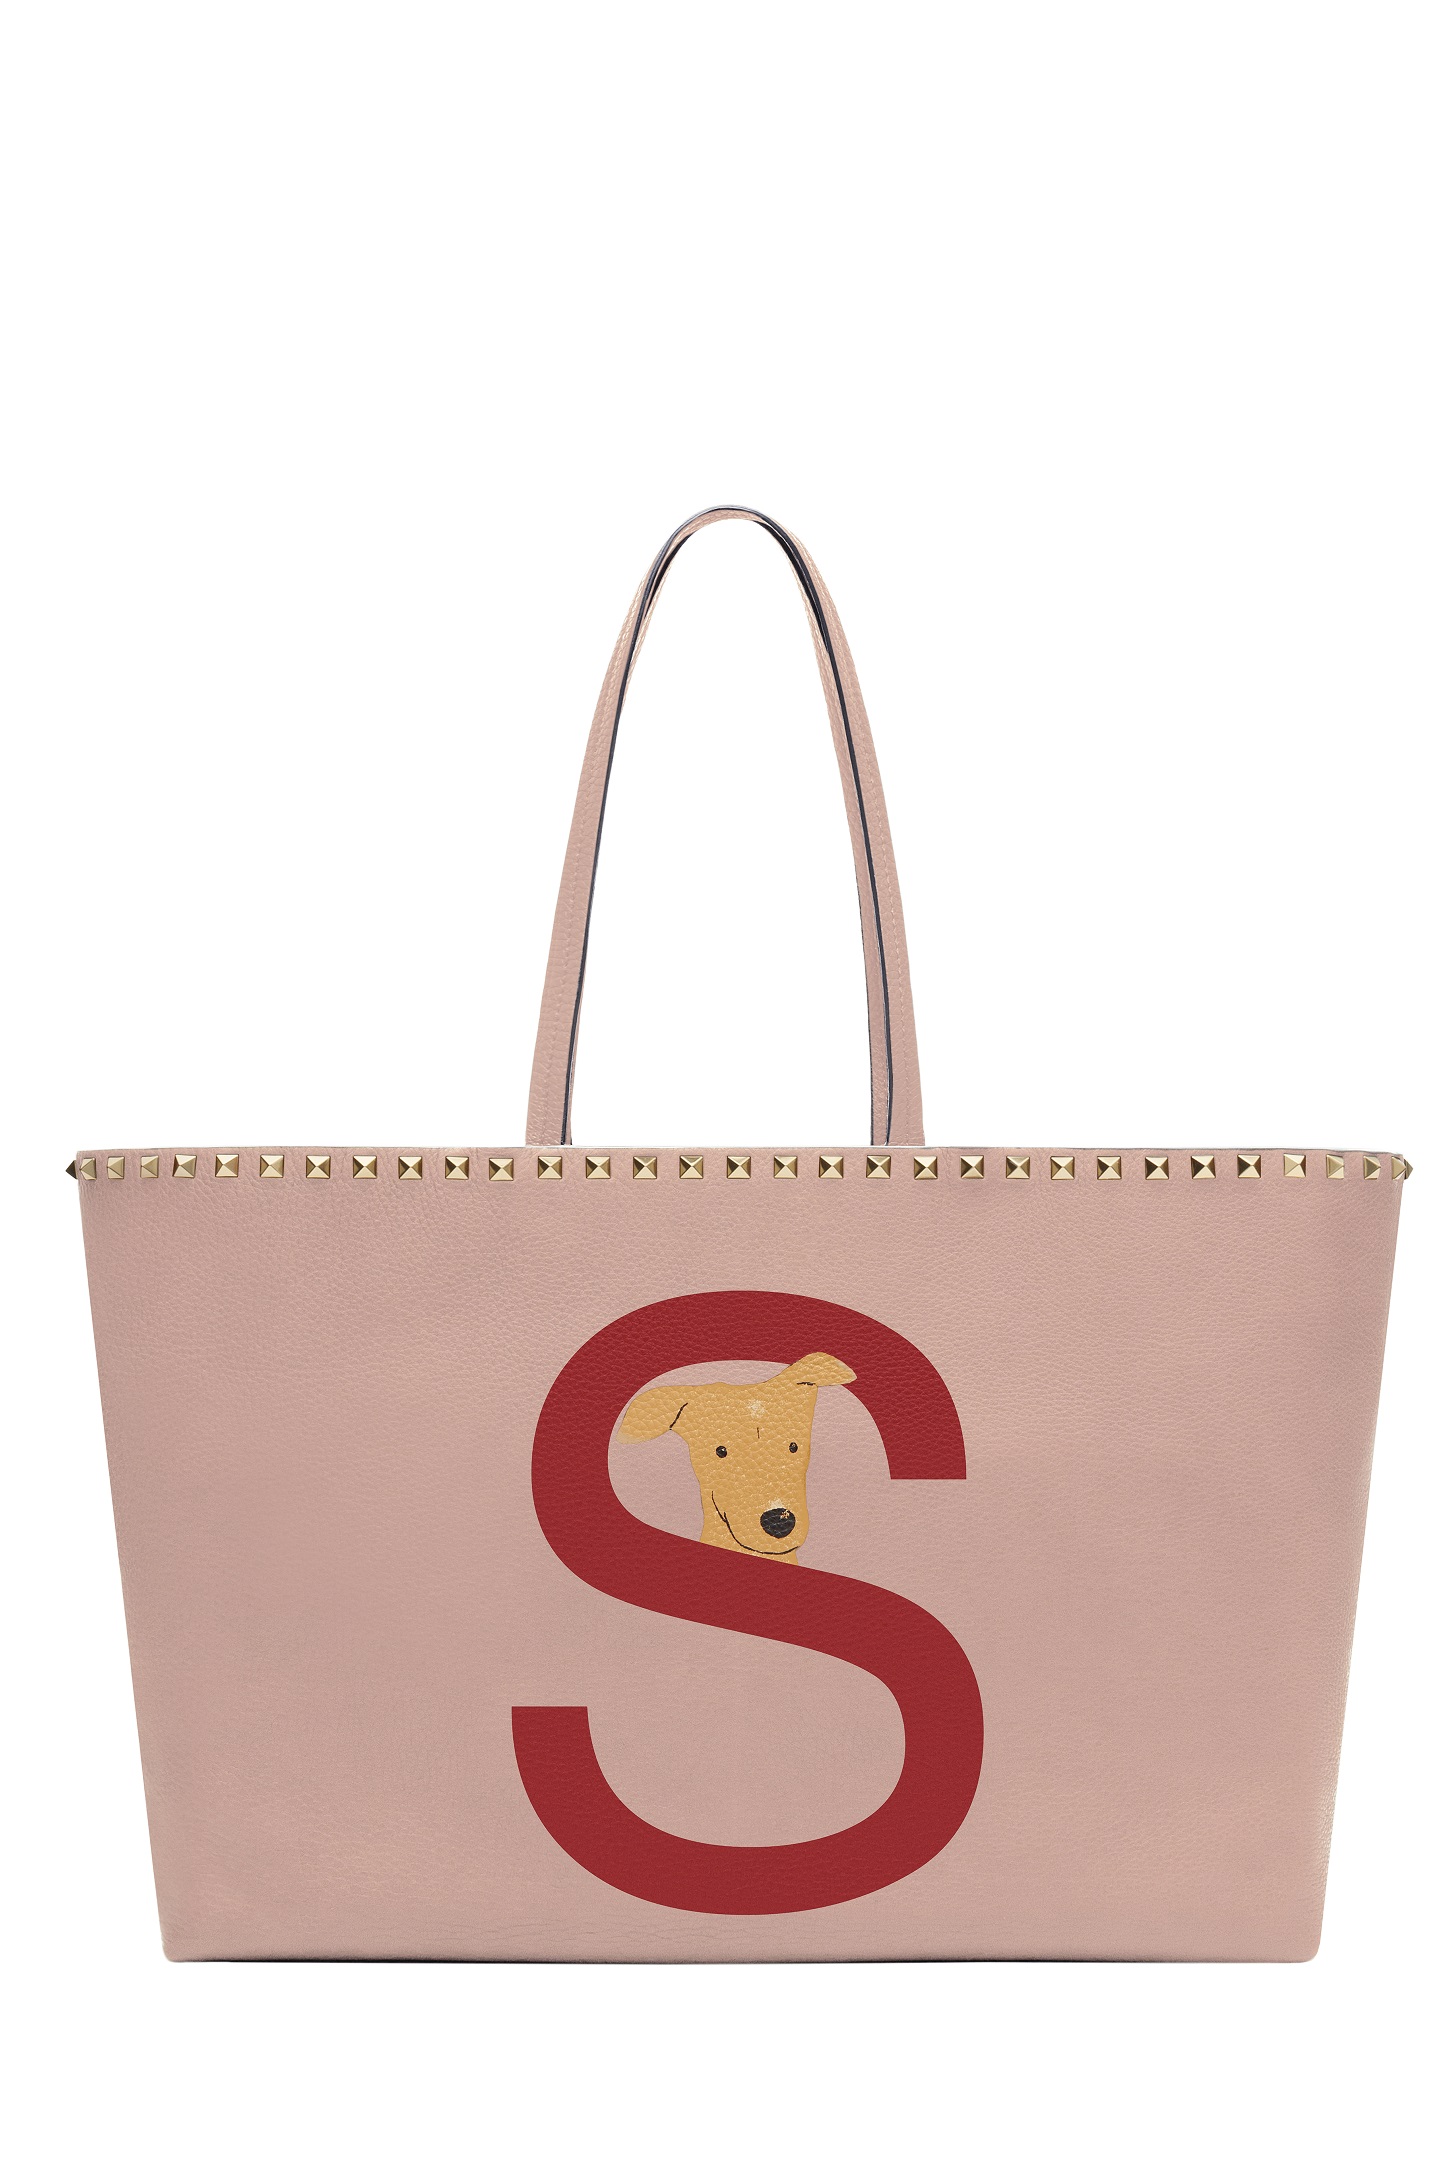 Valentino Garavani Women's Rockstud Pet Customizable Tote Bag - Pink - Totes